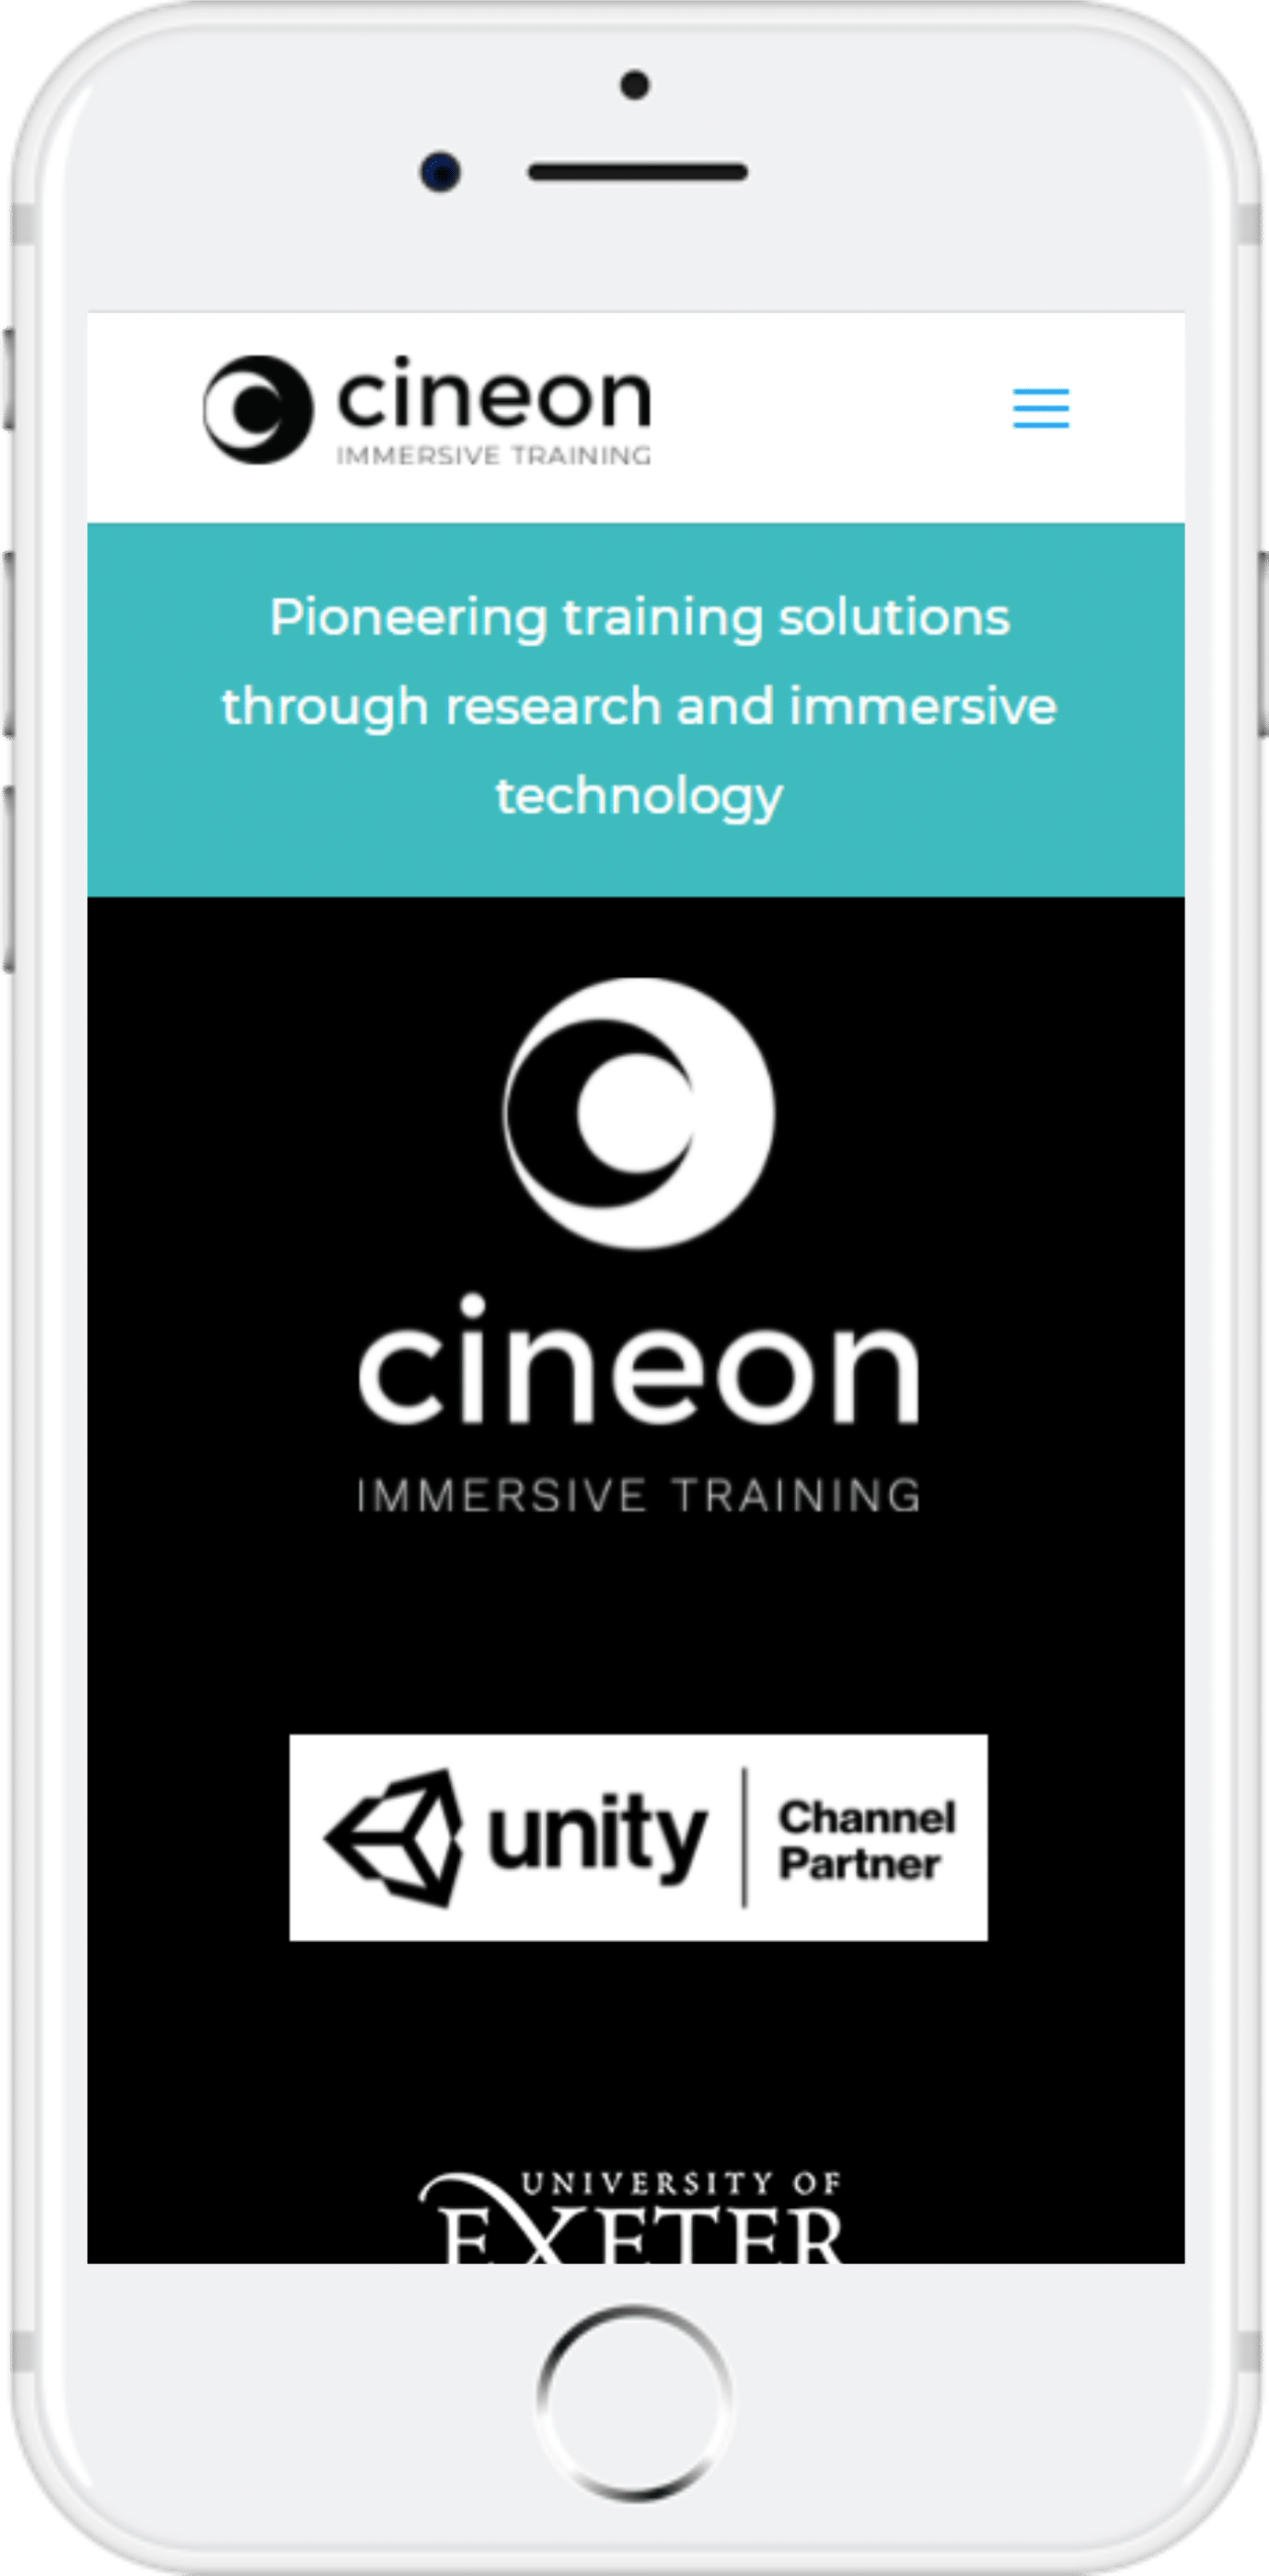 Cineon Immersive Training website